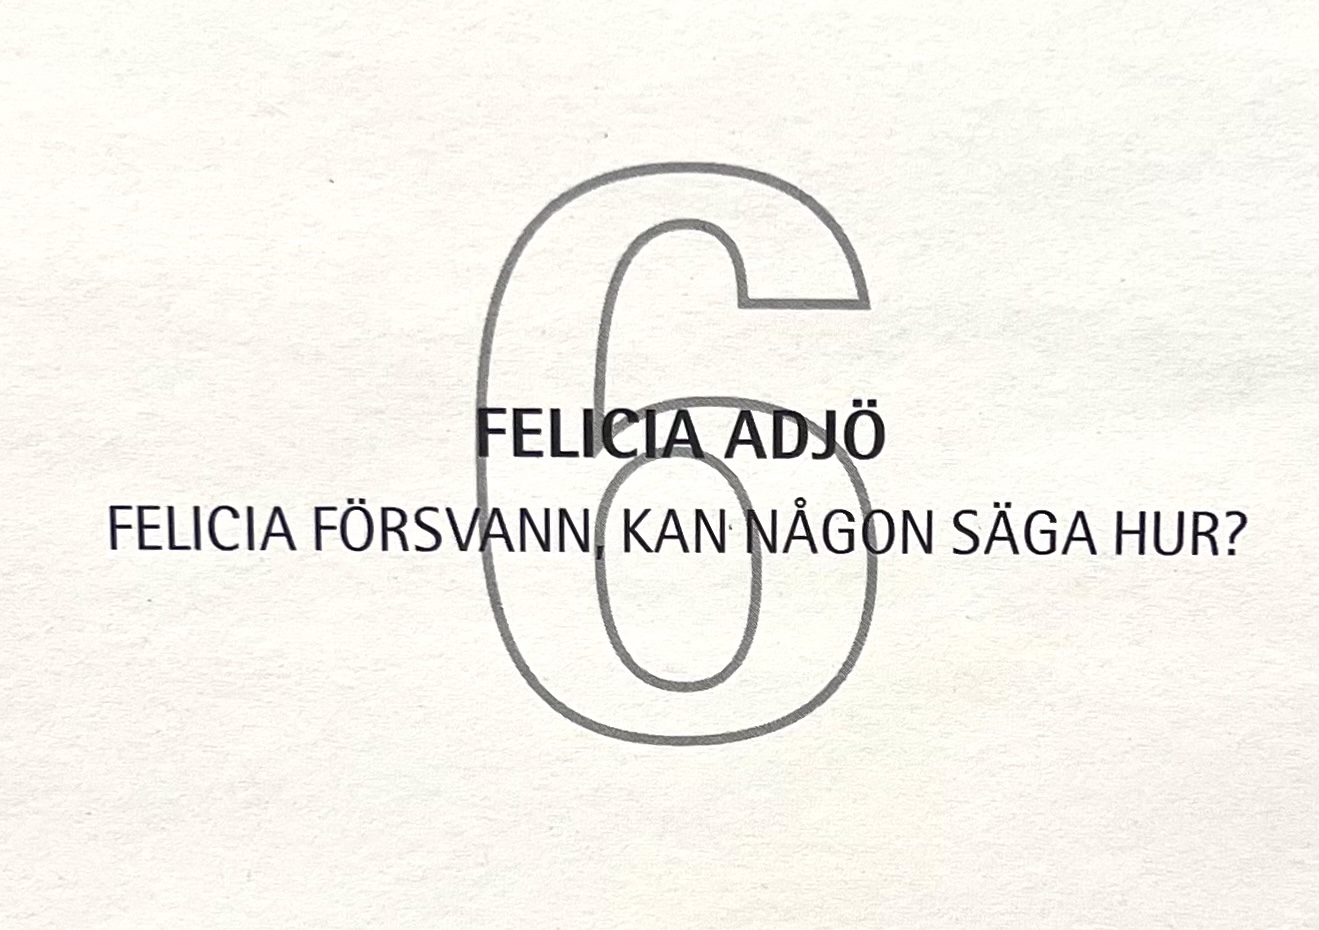 Jussi Taipaleenmäki, Litografi, "Felicia Adjö" 56 x 43,5 cm